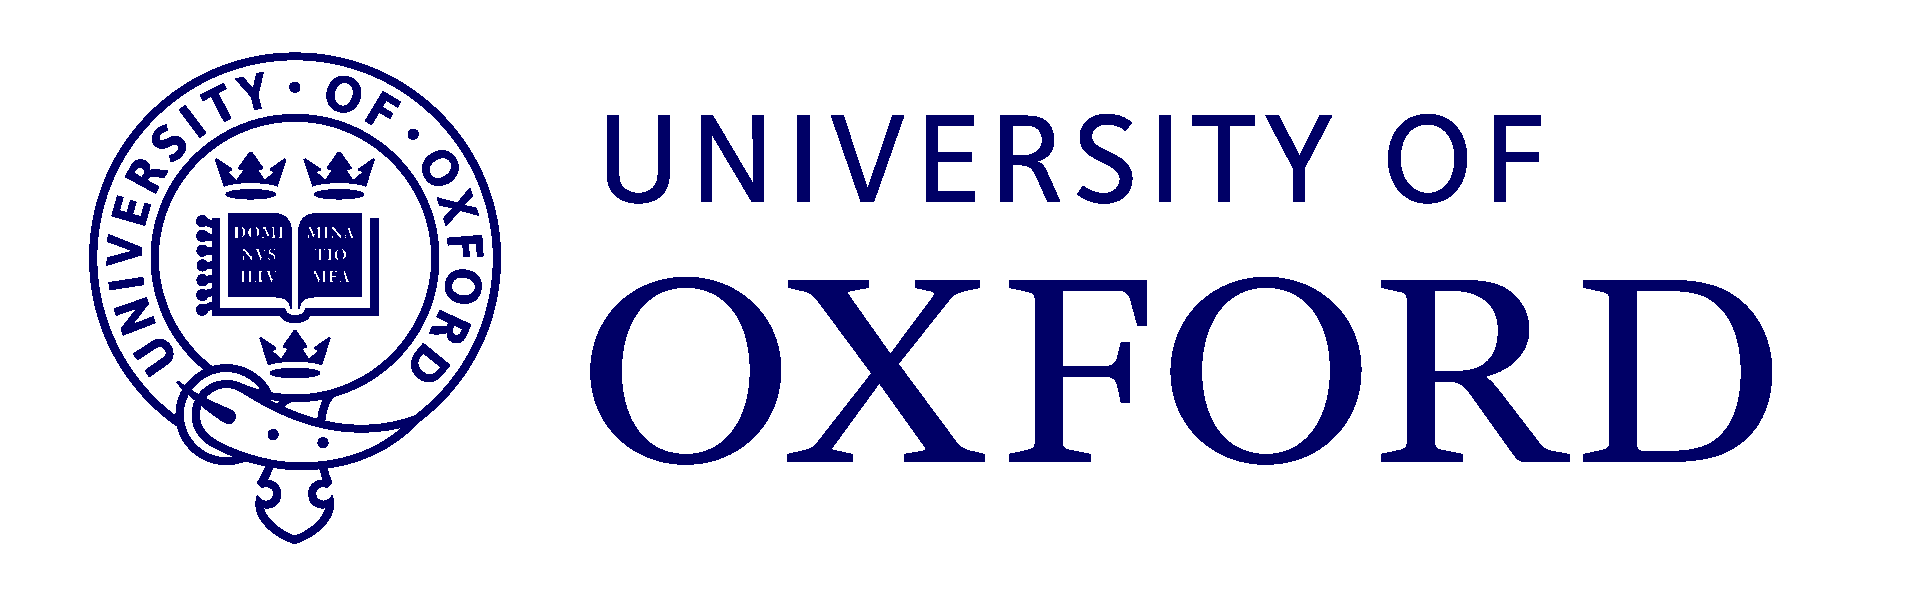 imgbin_university-of-oxford-logo-oxford-university-innovation-brand-png